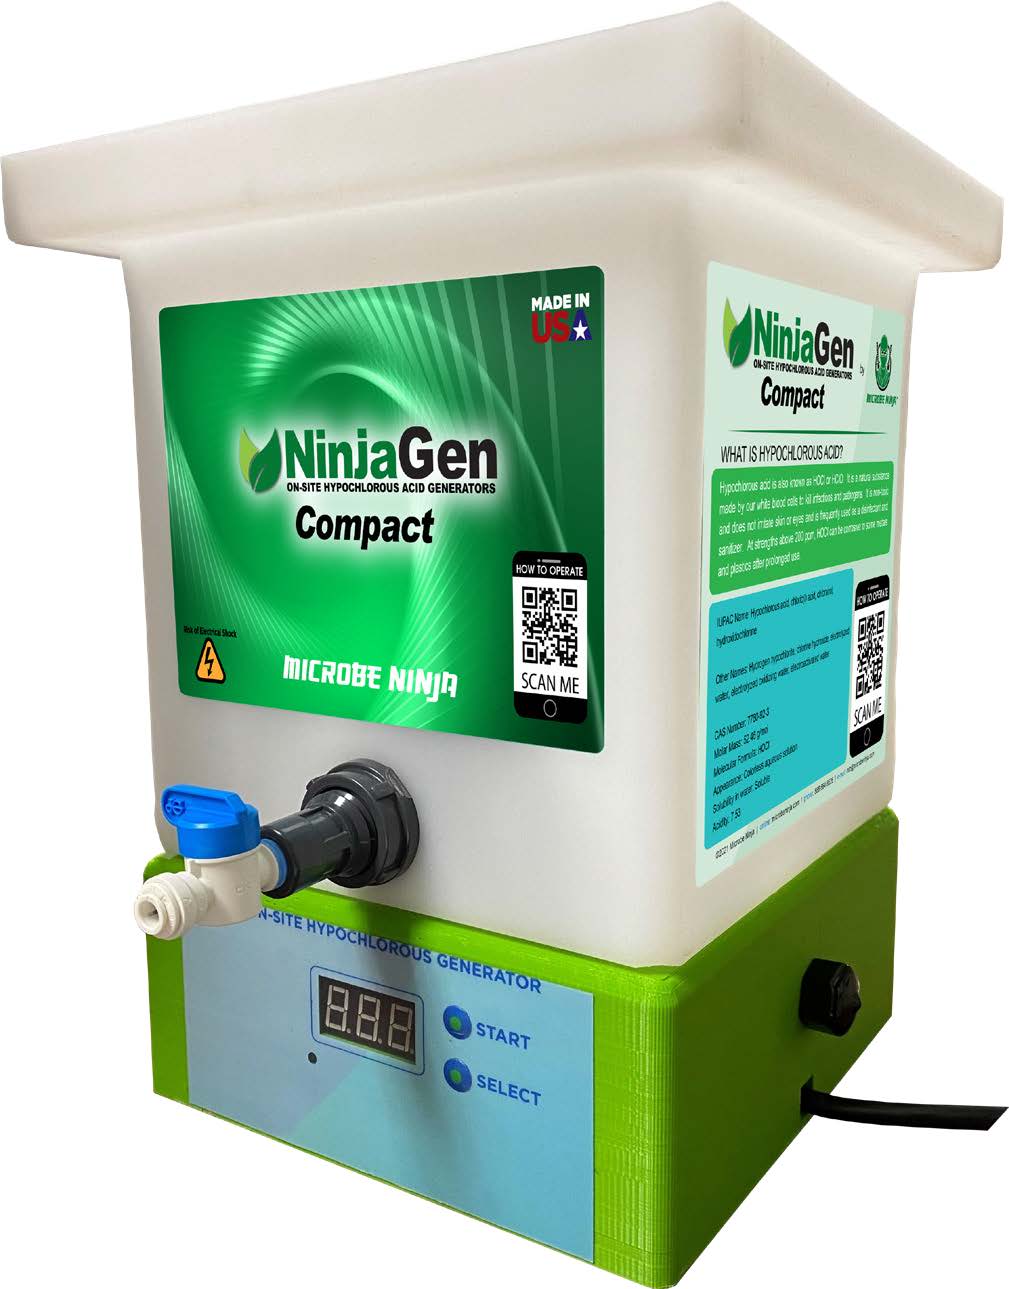 NinjaGen Compact On-site Hypocholorous Acid Generator